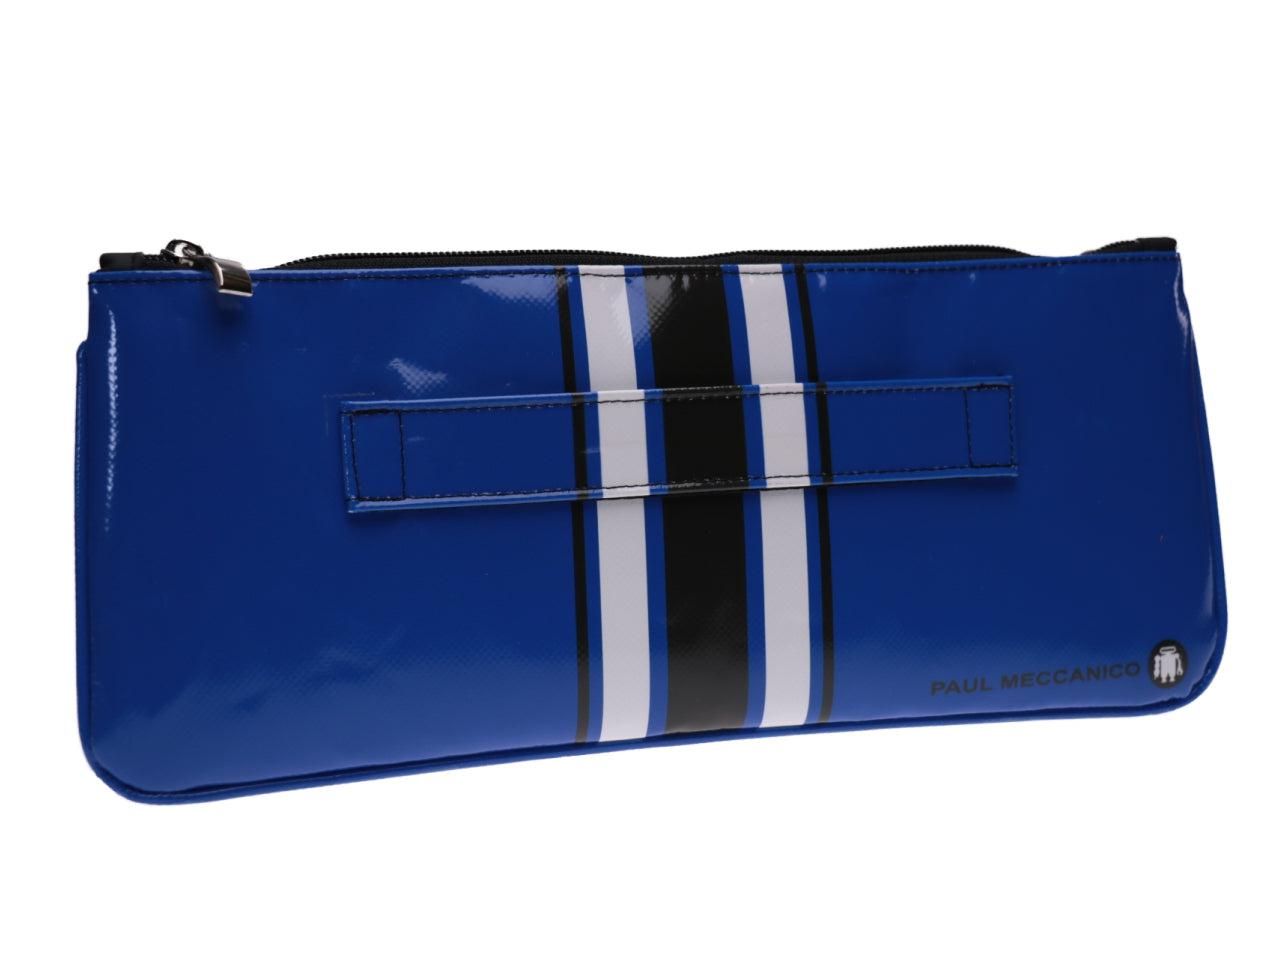 CLUTCH BAG ROYAL BLUE. MODEL RIBELLA MADE OF LORRY TARPAULIN. - Unique Pieces Paul Meccanico